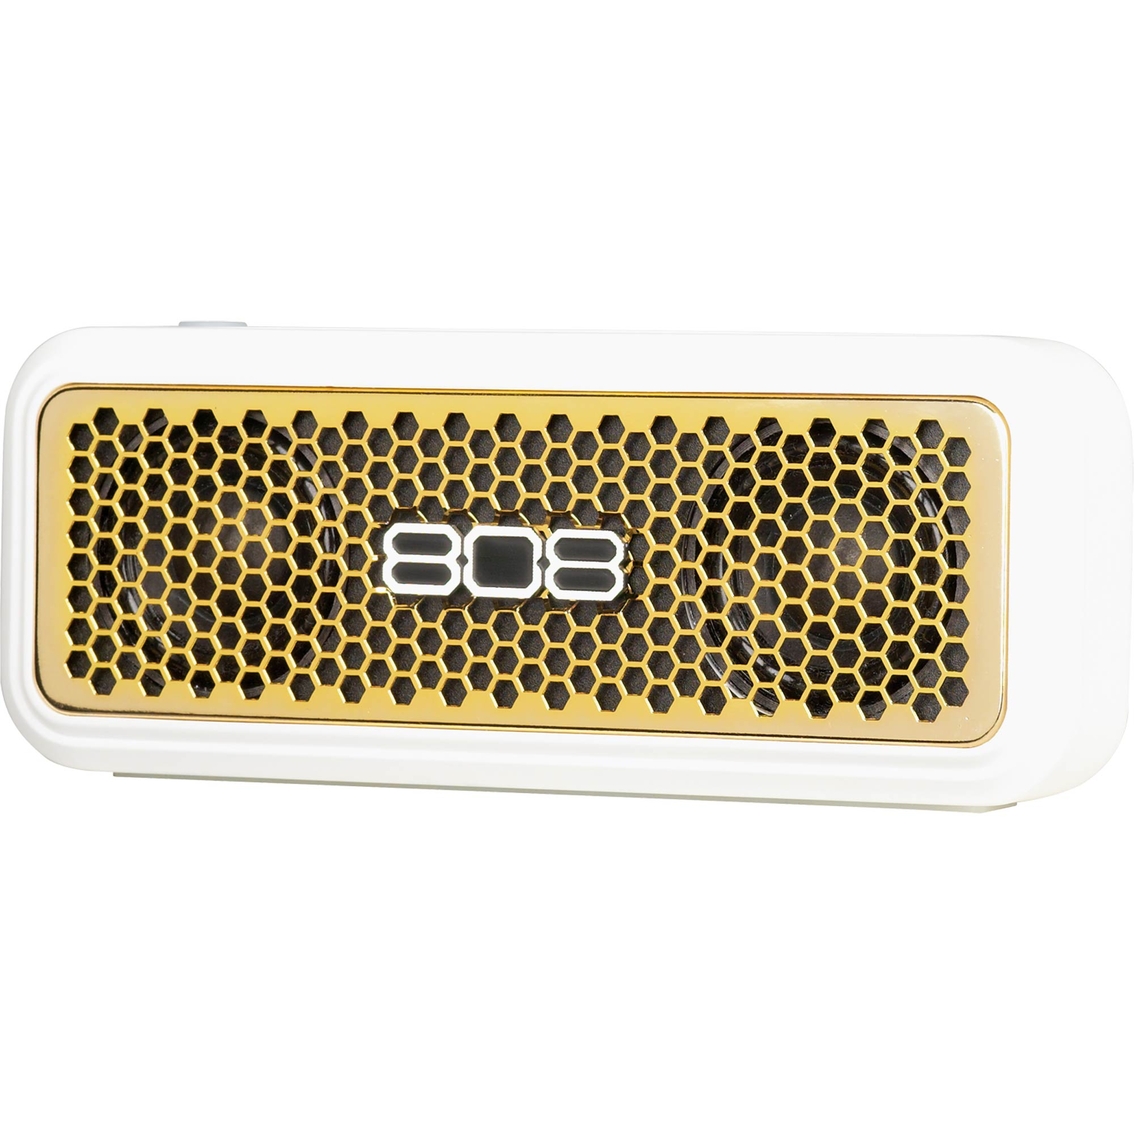 808 xs bluetooth speaker